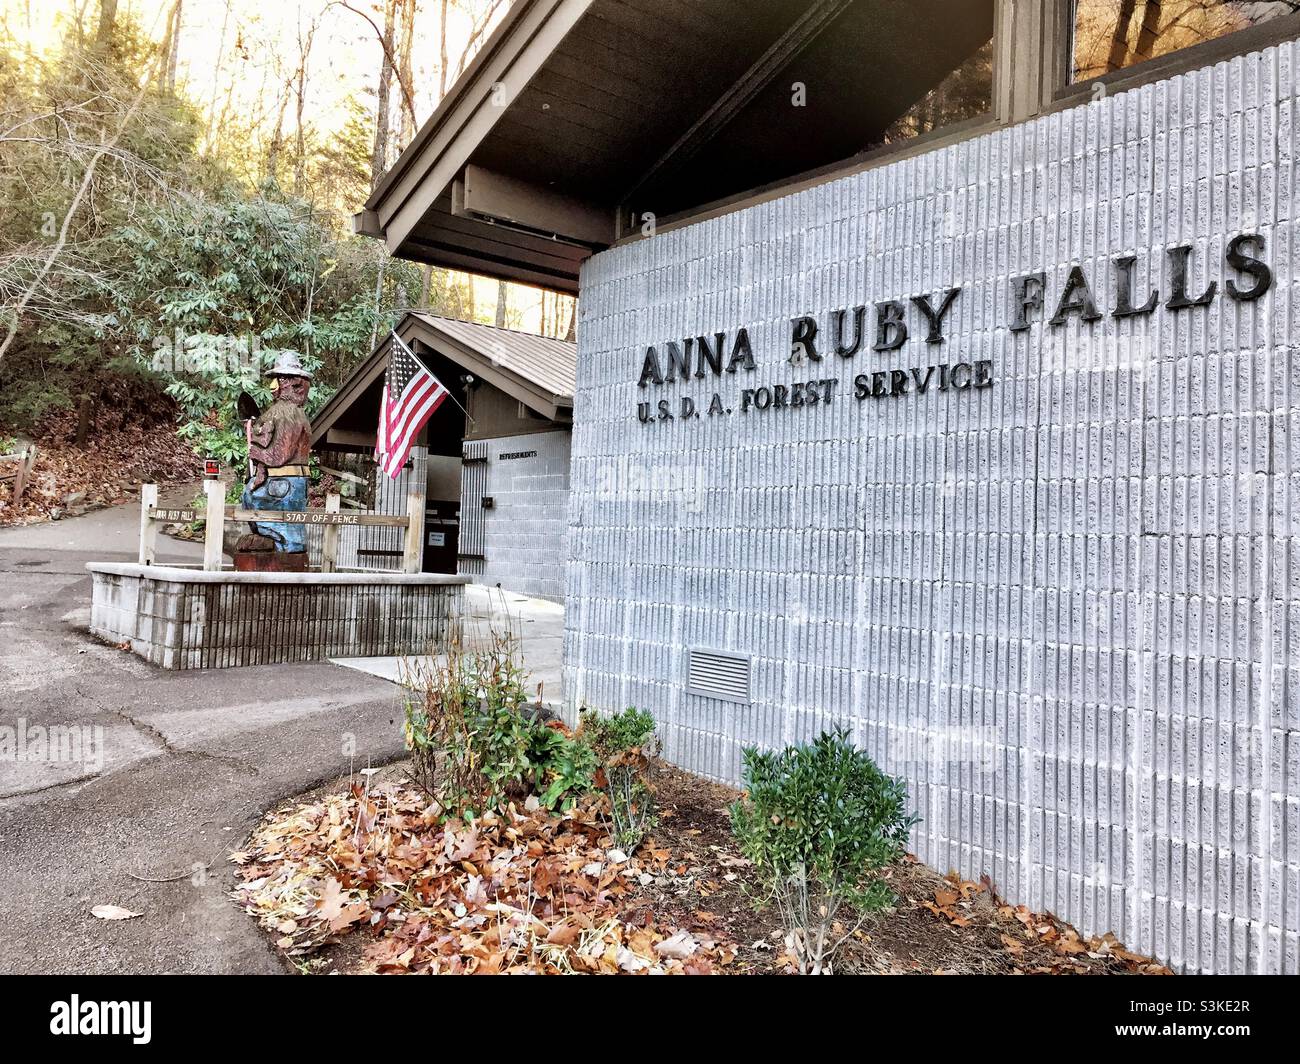 Centro de bienvenida en Anna Ruby Falls en Helen Georgia. Foto de stock